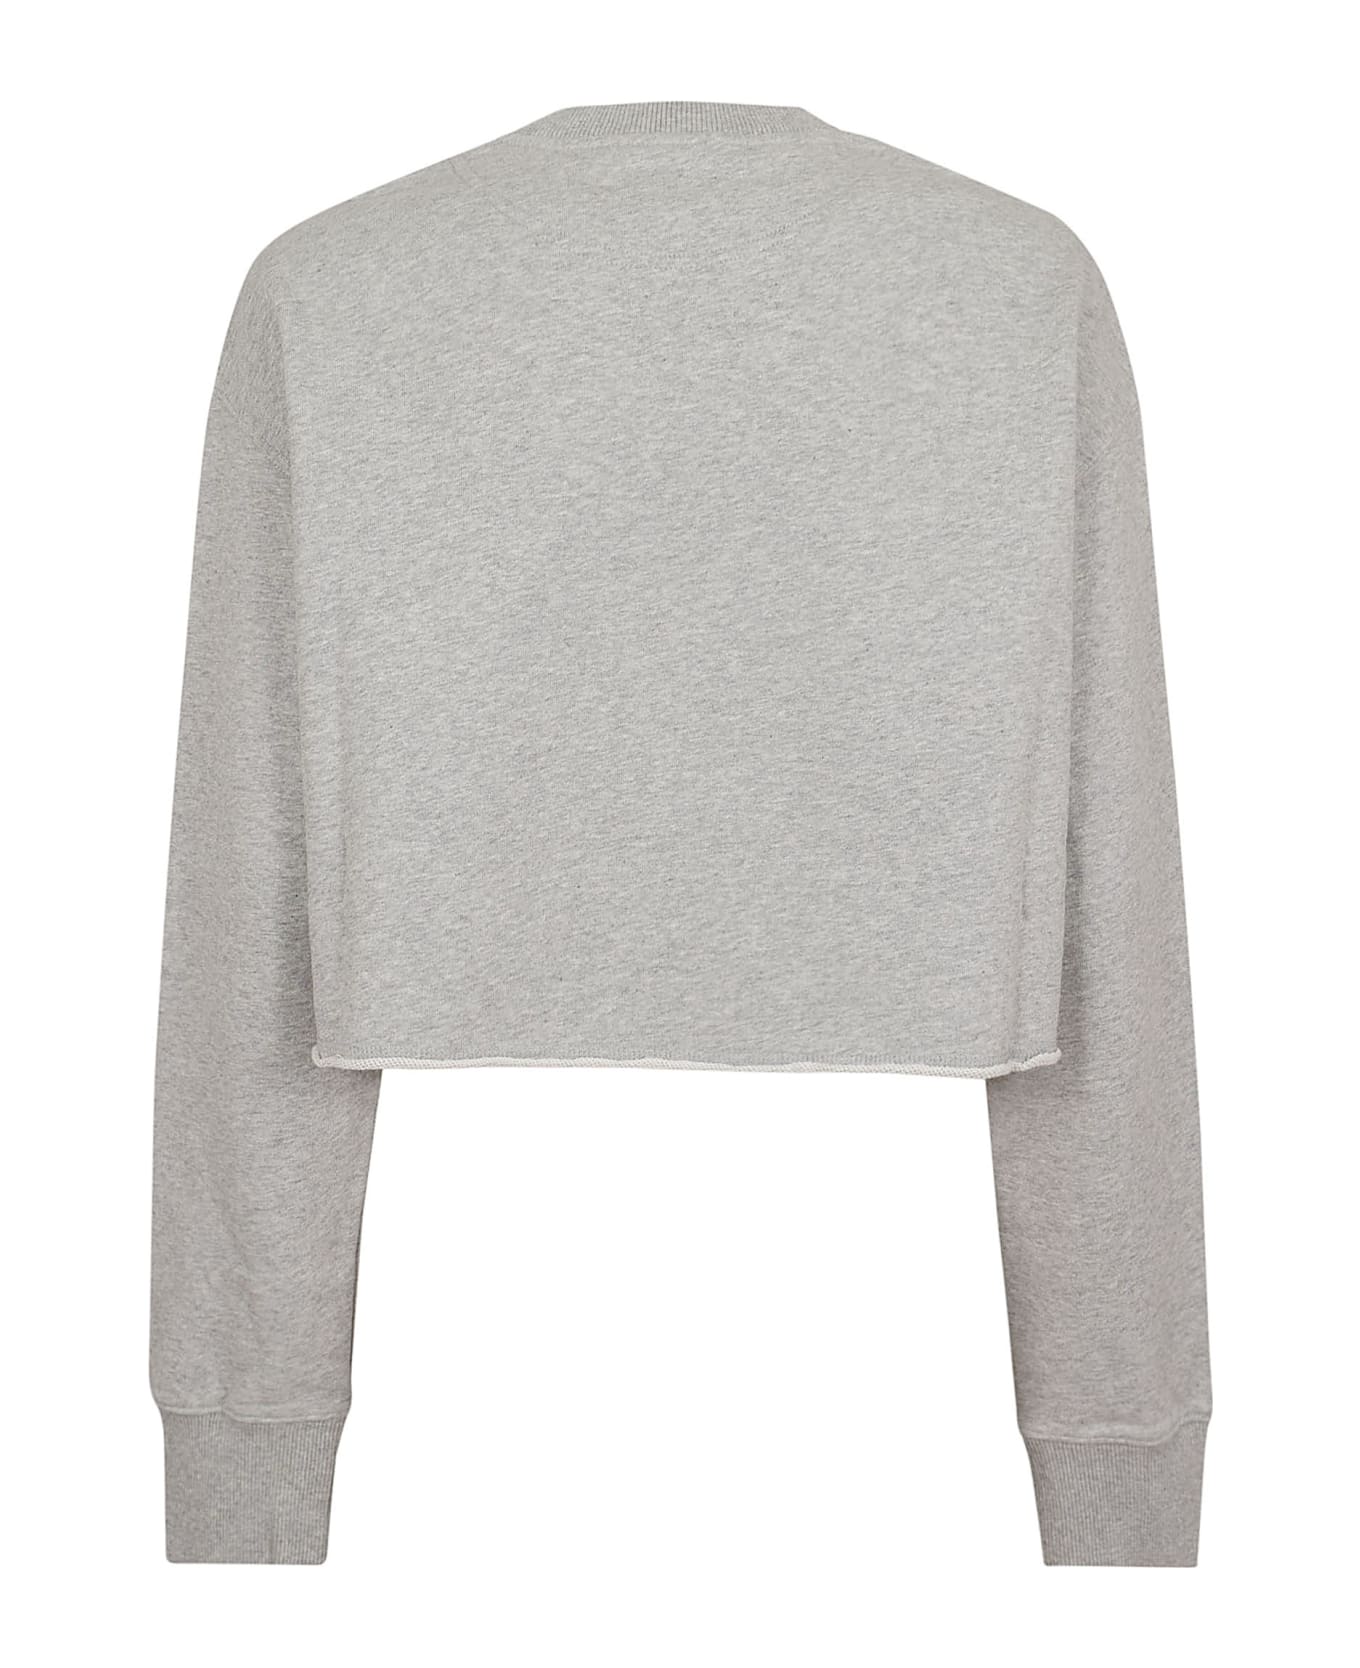 Stella McCartney Logo Patch Cropped Sweatshirt - Light Grey Melange